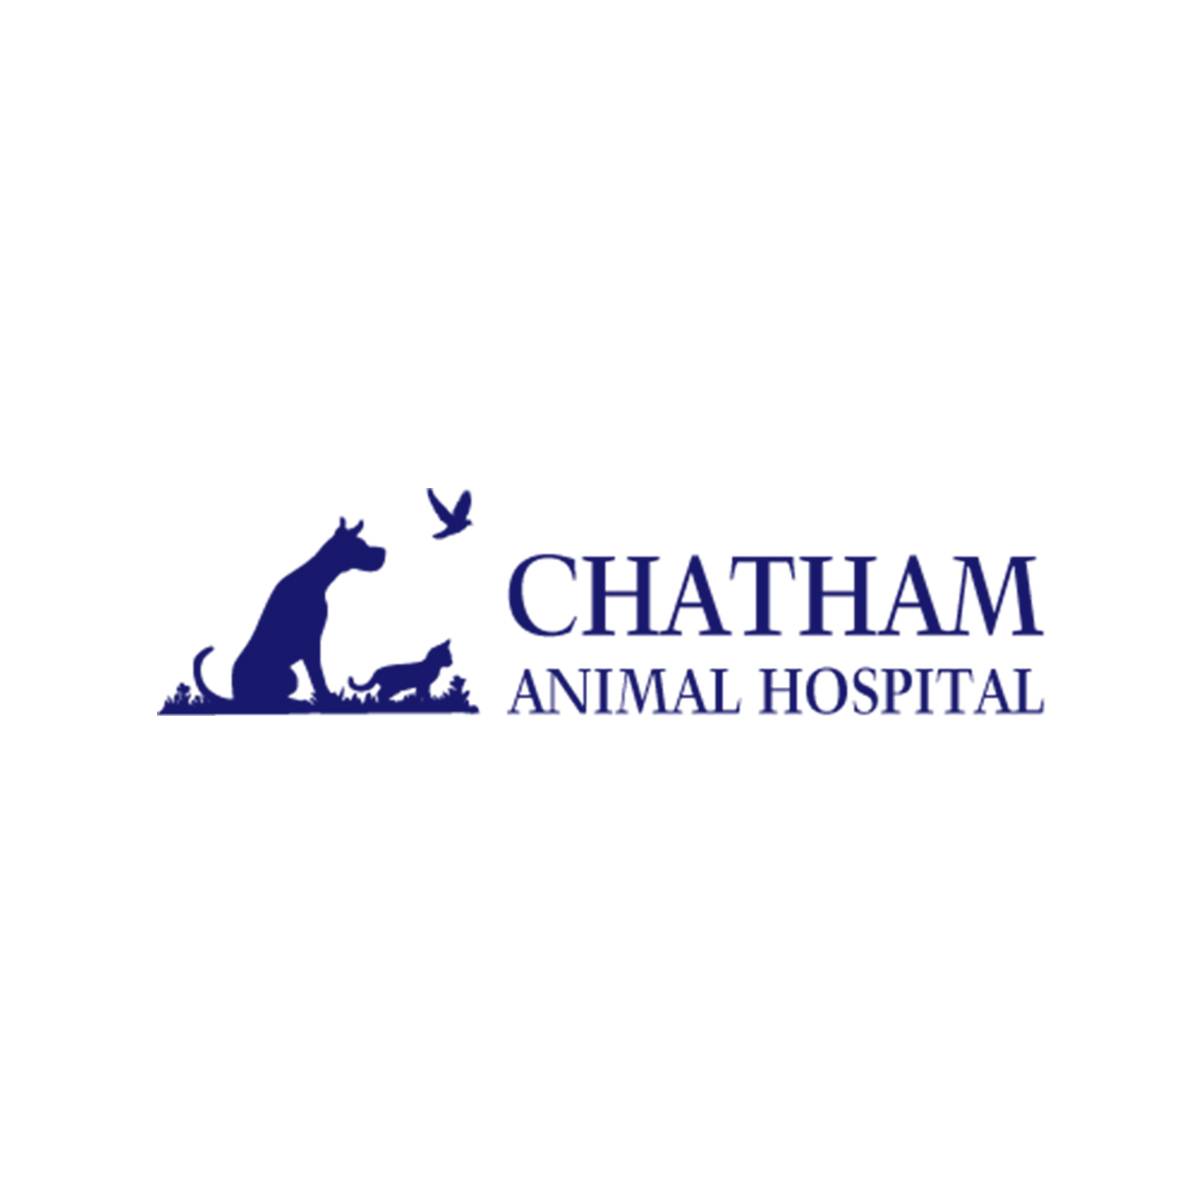 Chatham Animal Hospital - Cary, NC 27513 - (919)469-8114 | ShowMeLocal.com